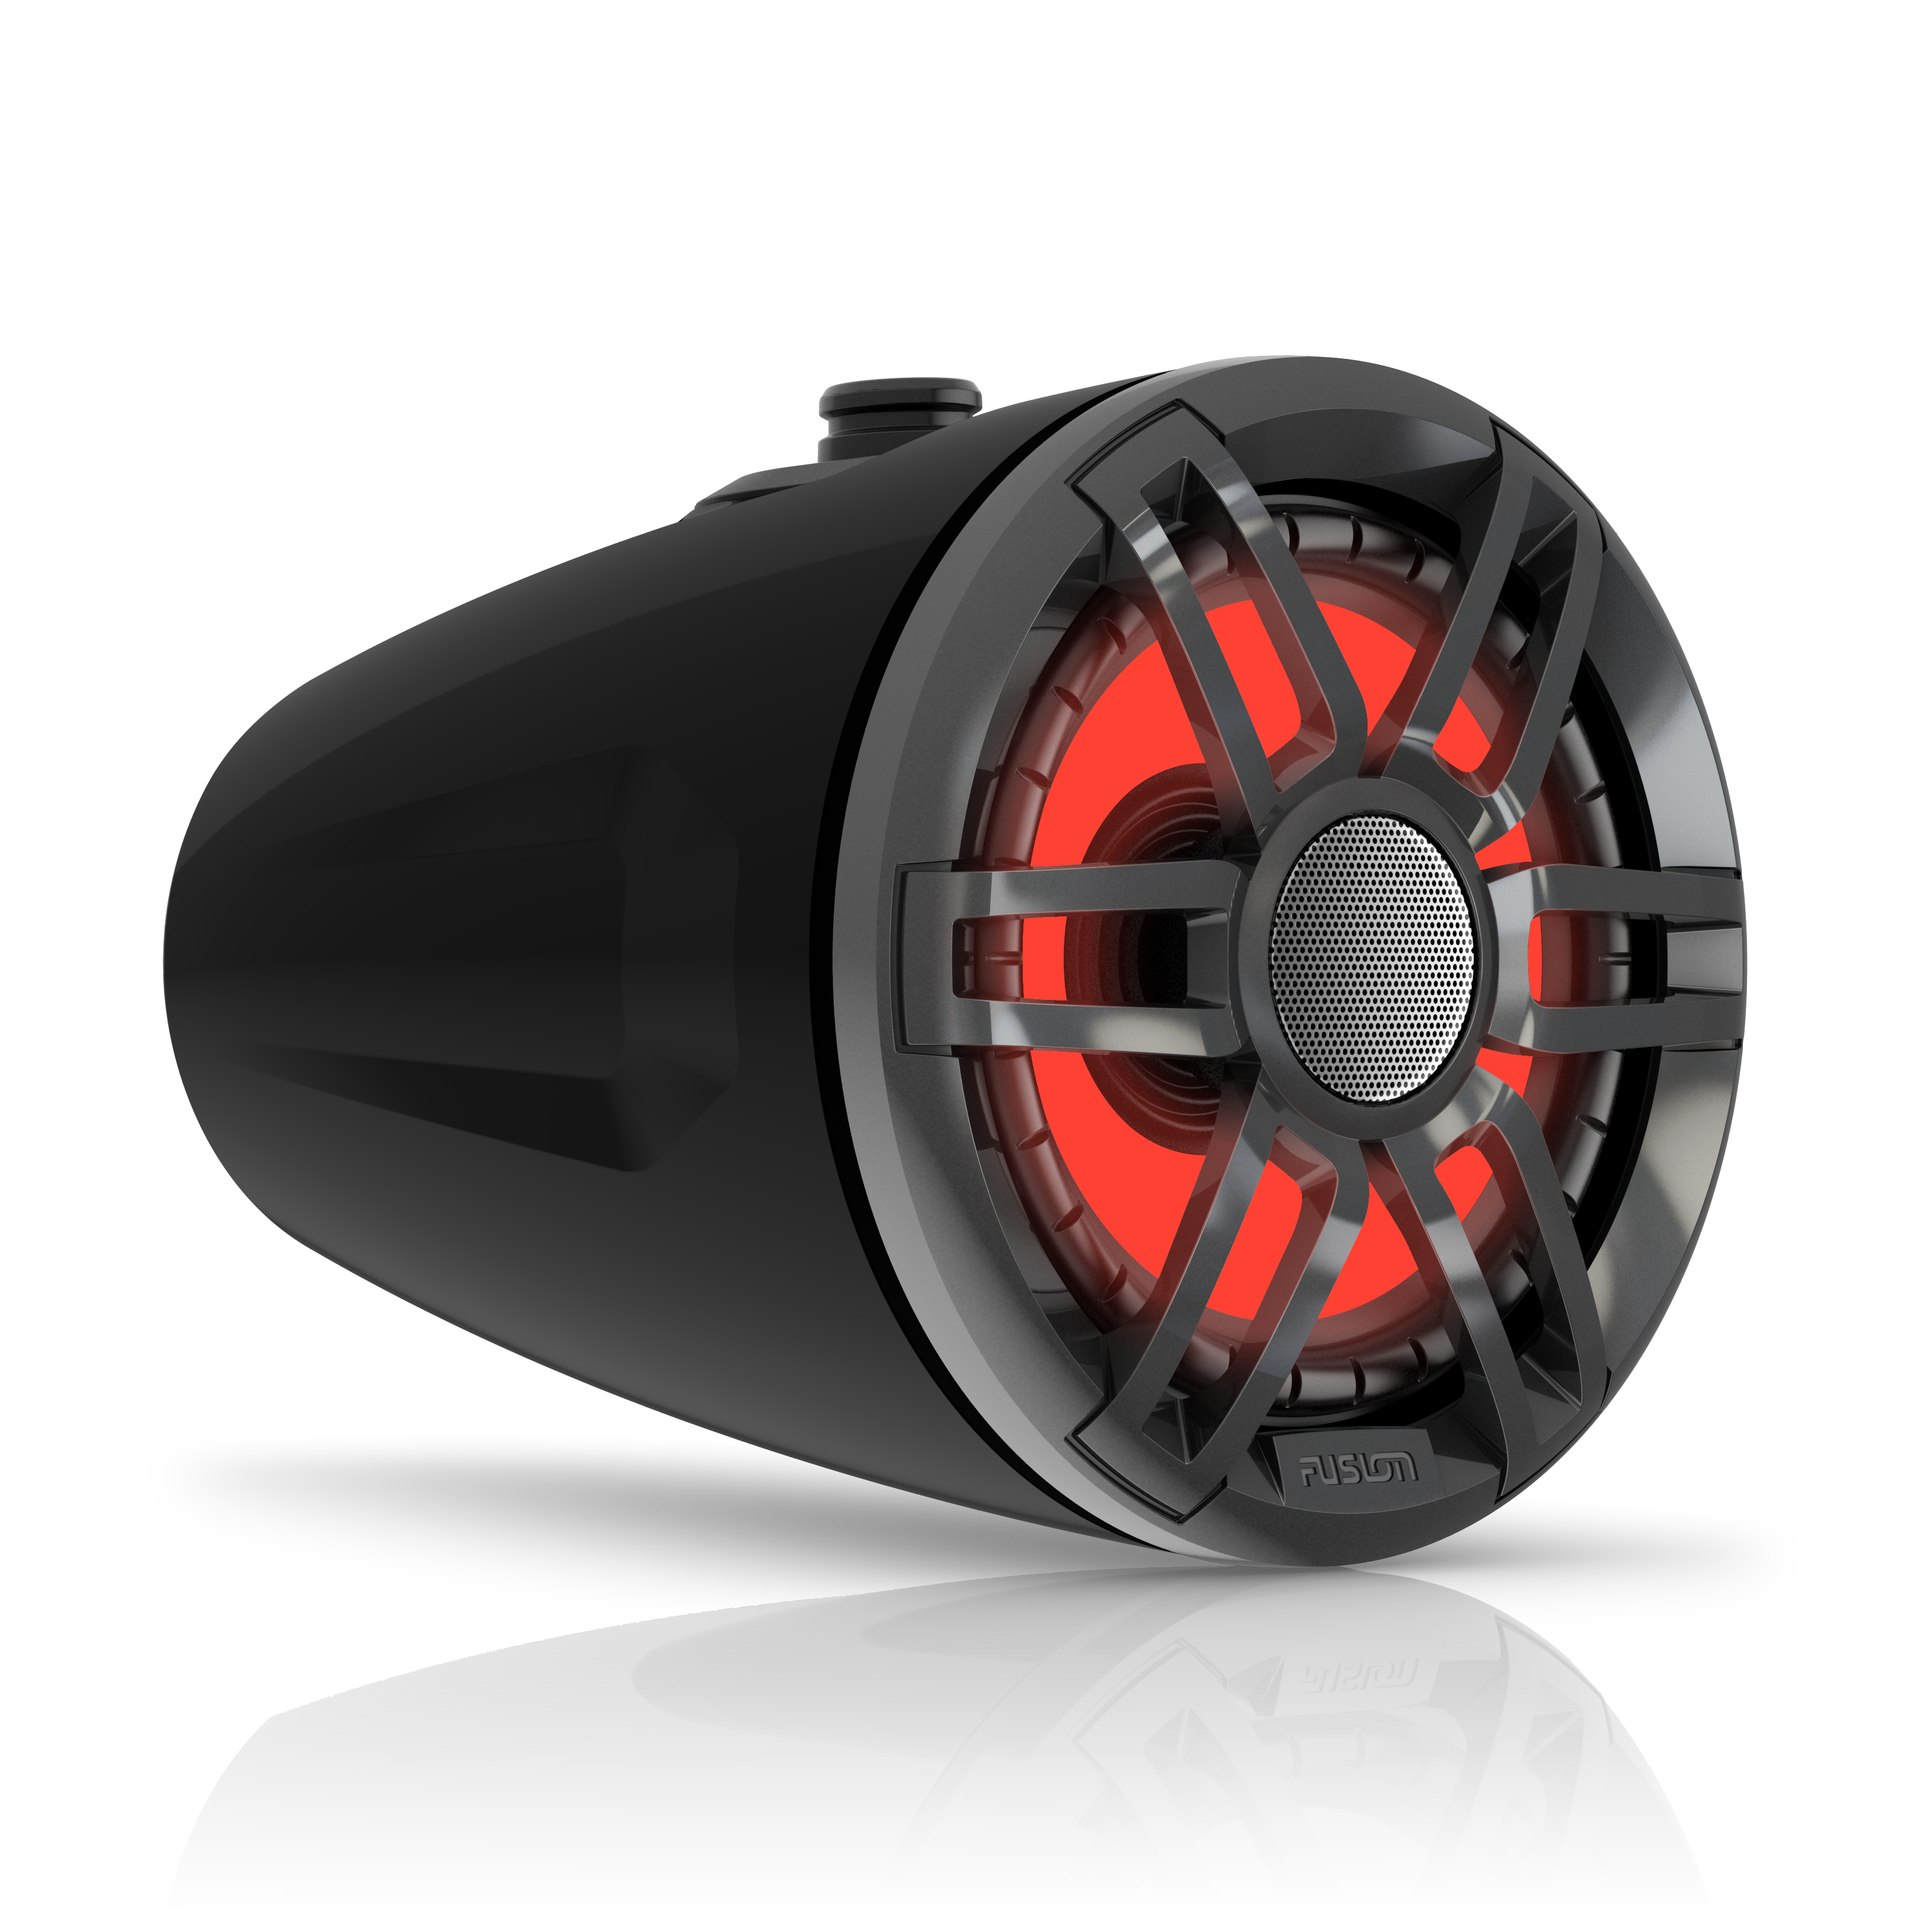 Garmin Fusion® XS Series Wake Tower Marinehøjttalere, 6,5" 200 watt Sports Black wake tower marinehøjttaler med RGB LED-belysning